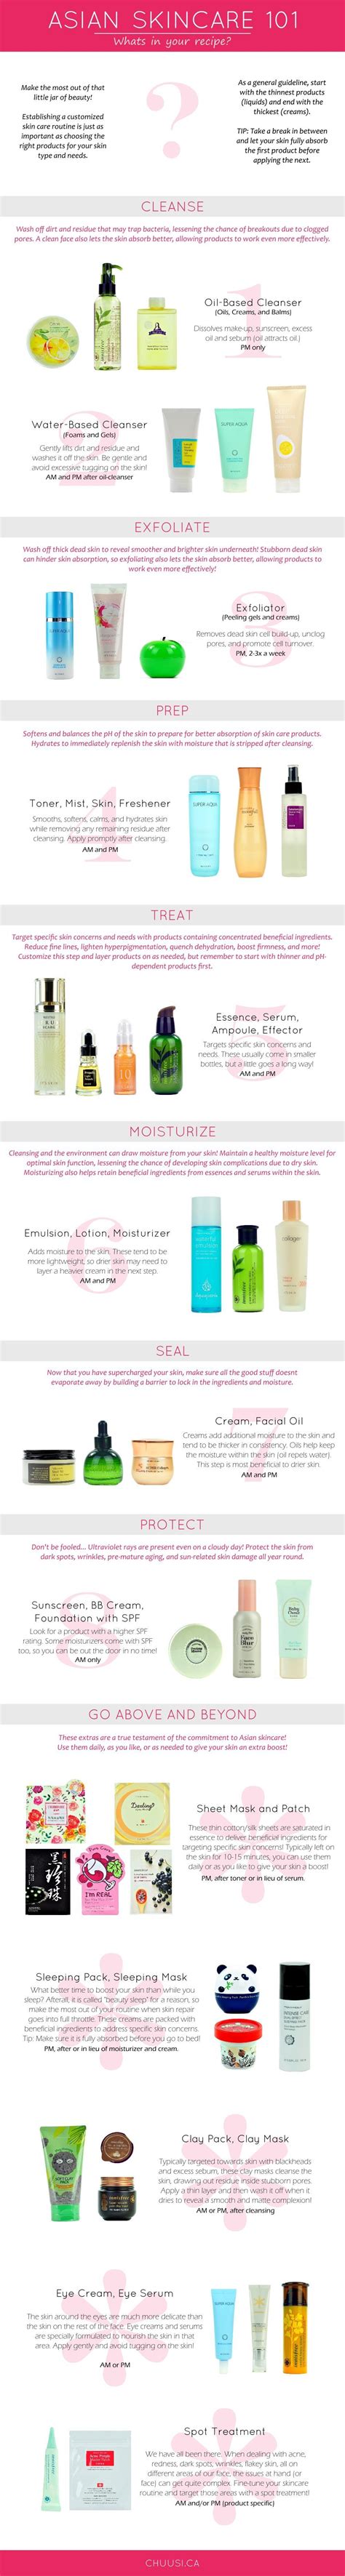 Beauty Routine Skin Care The Korean Asian Skincare